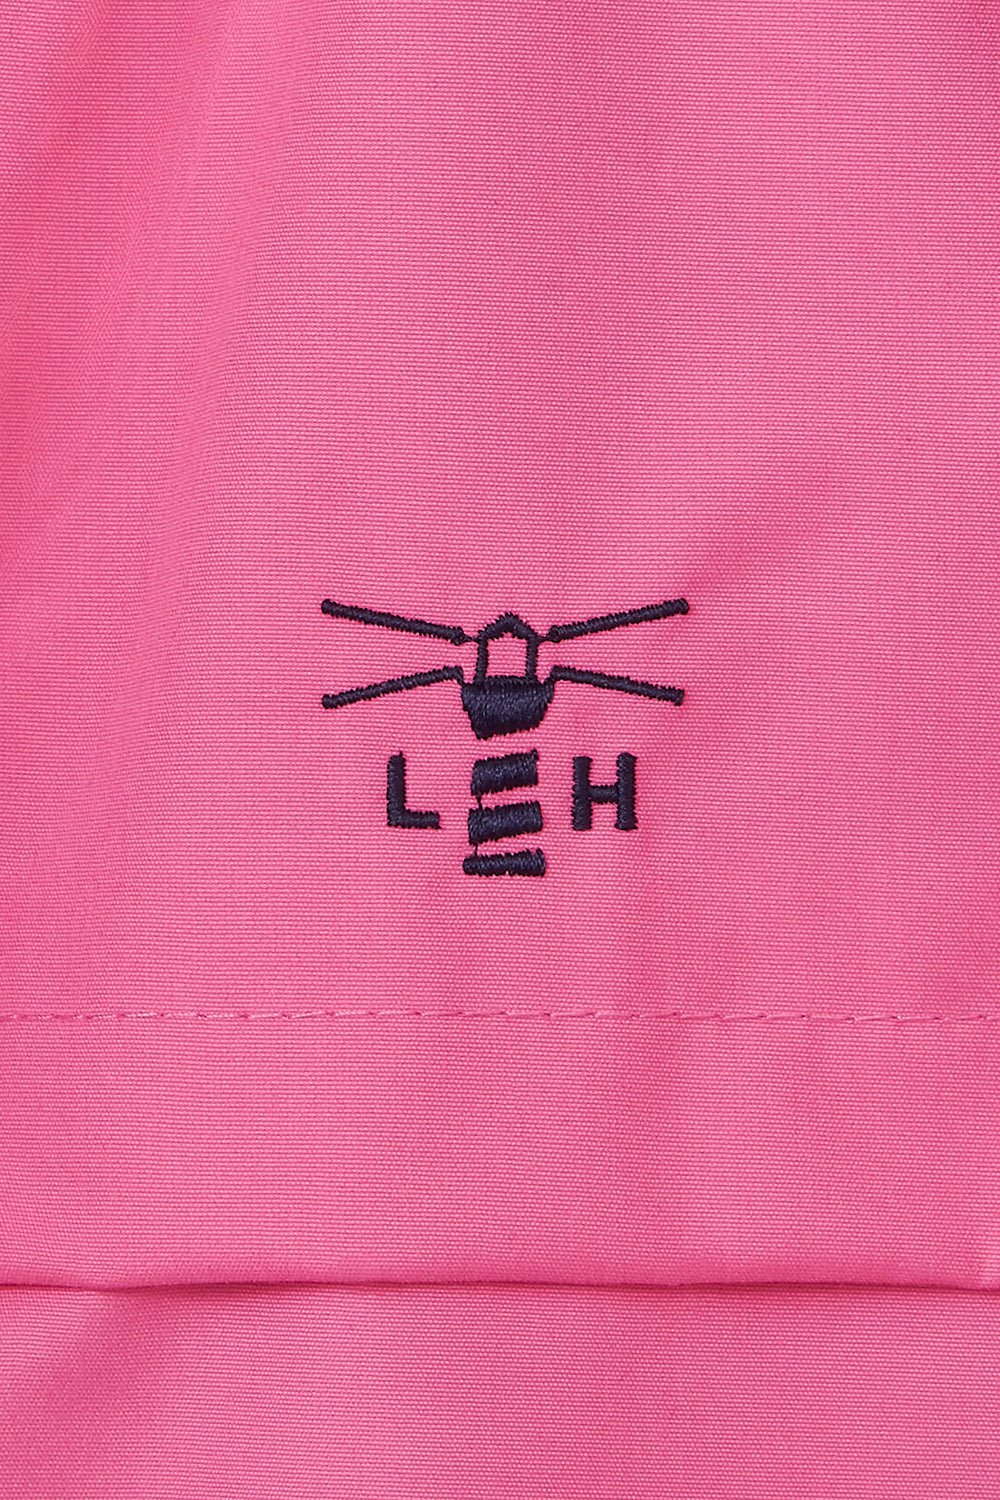 Beachcomber Jacket - New Pink - Lighthouse